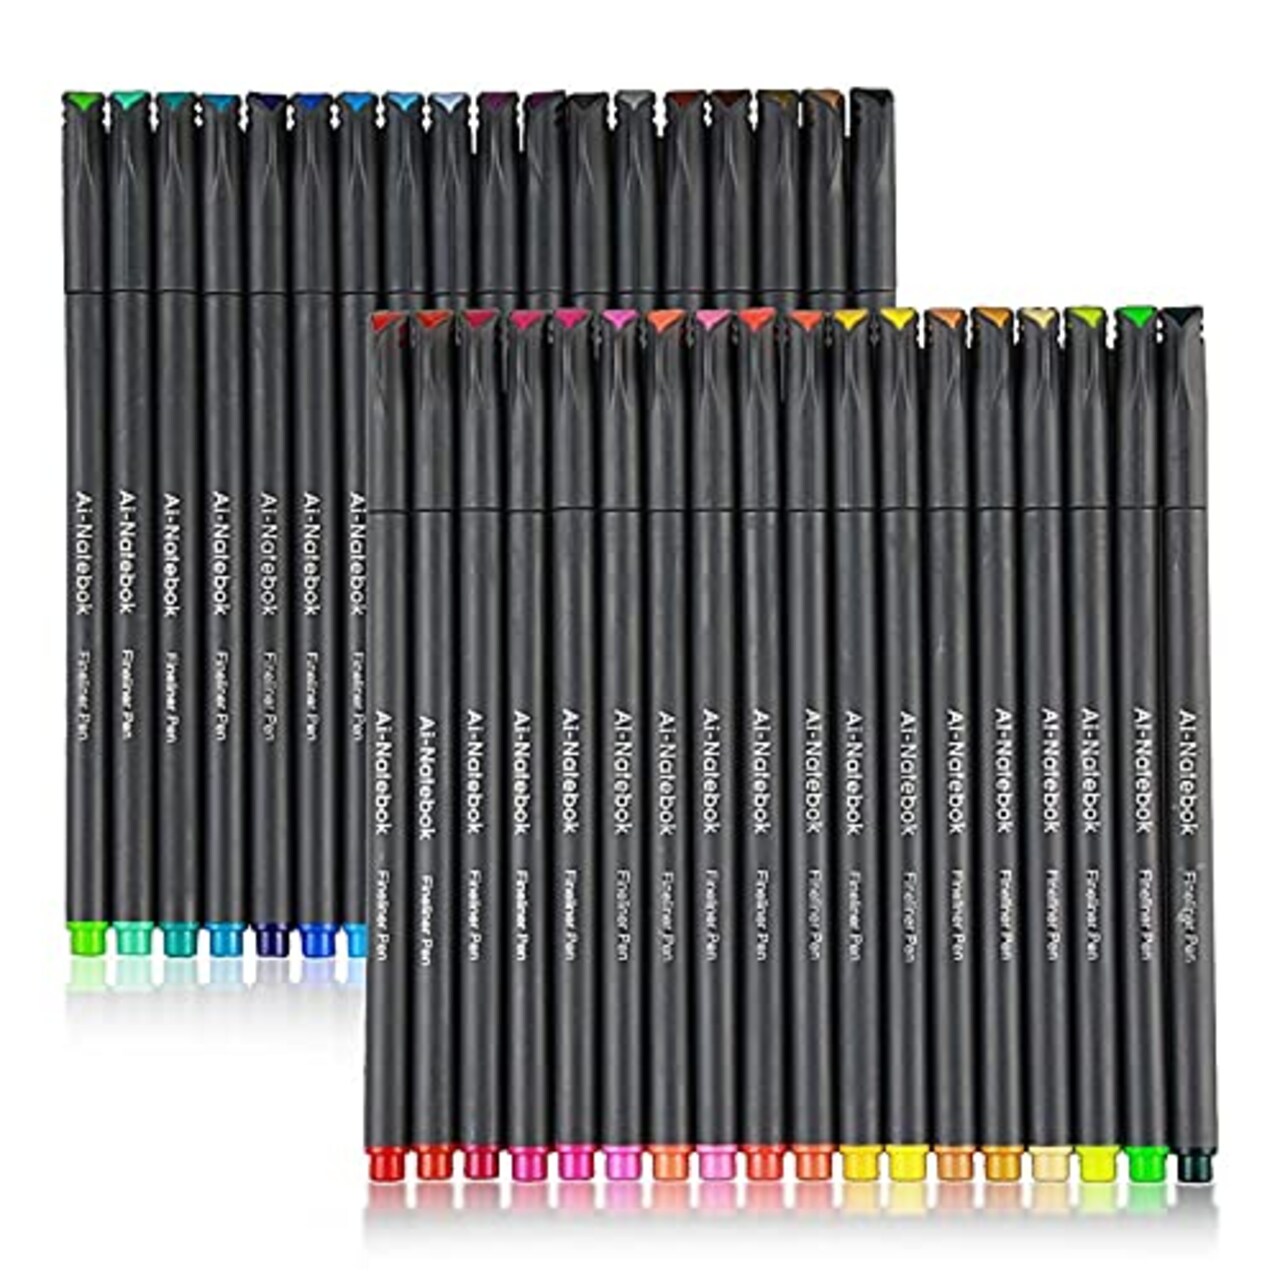 ai-natebok 36 Colored Fineliner Pens Fine Tip Pens Porous Fineliner Color  Pens for Journal Planner Writing Note Taking Calendar Agenda Coloring Art  School Office Supplies